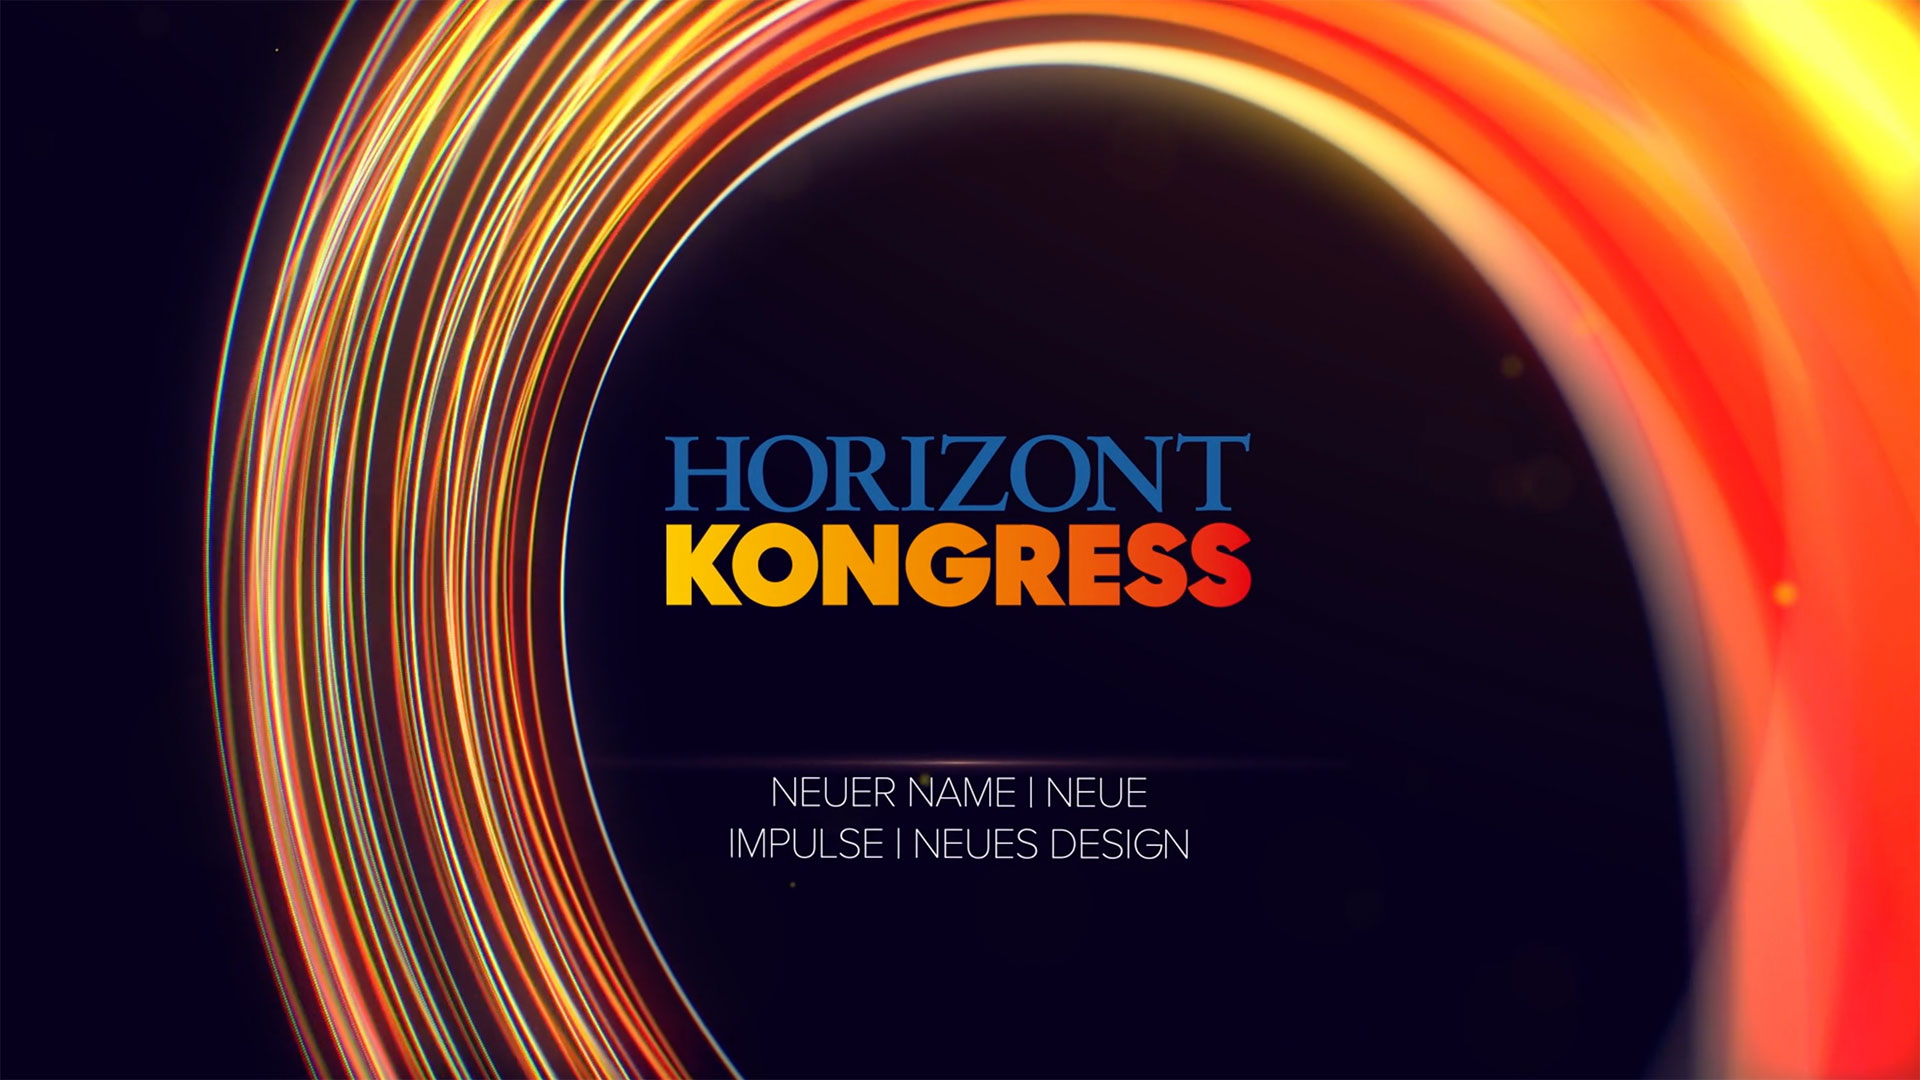 horizont kongress logo